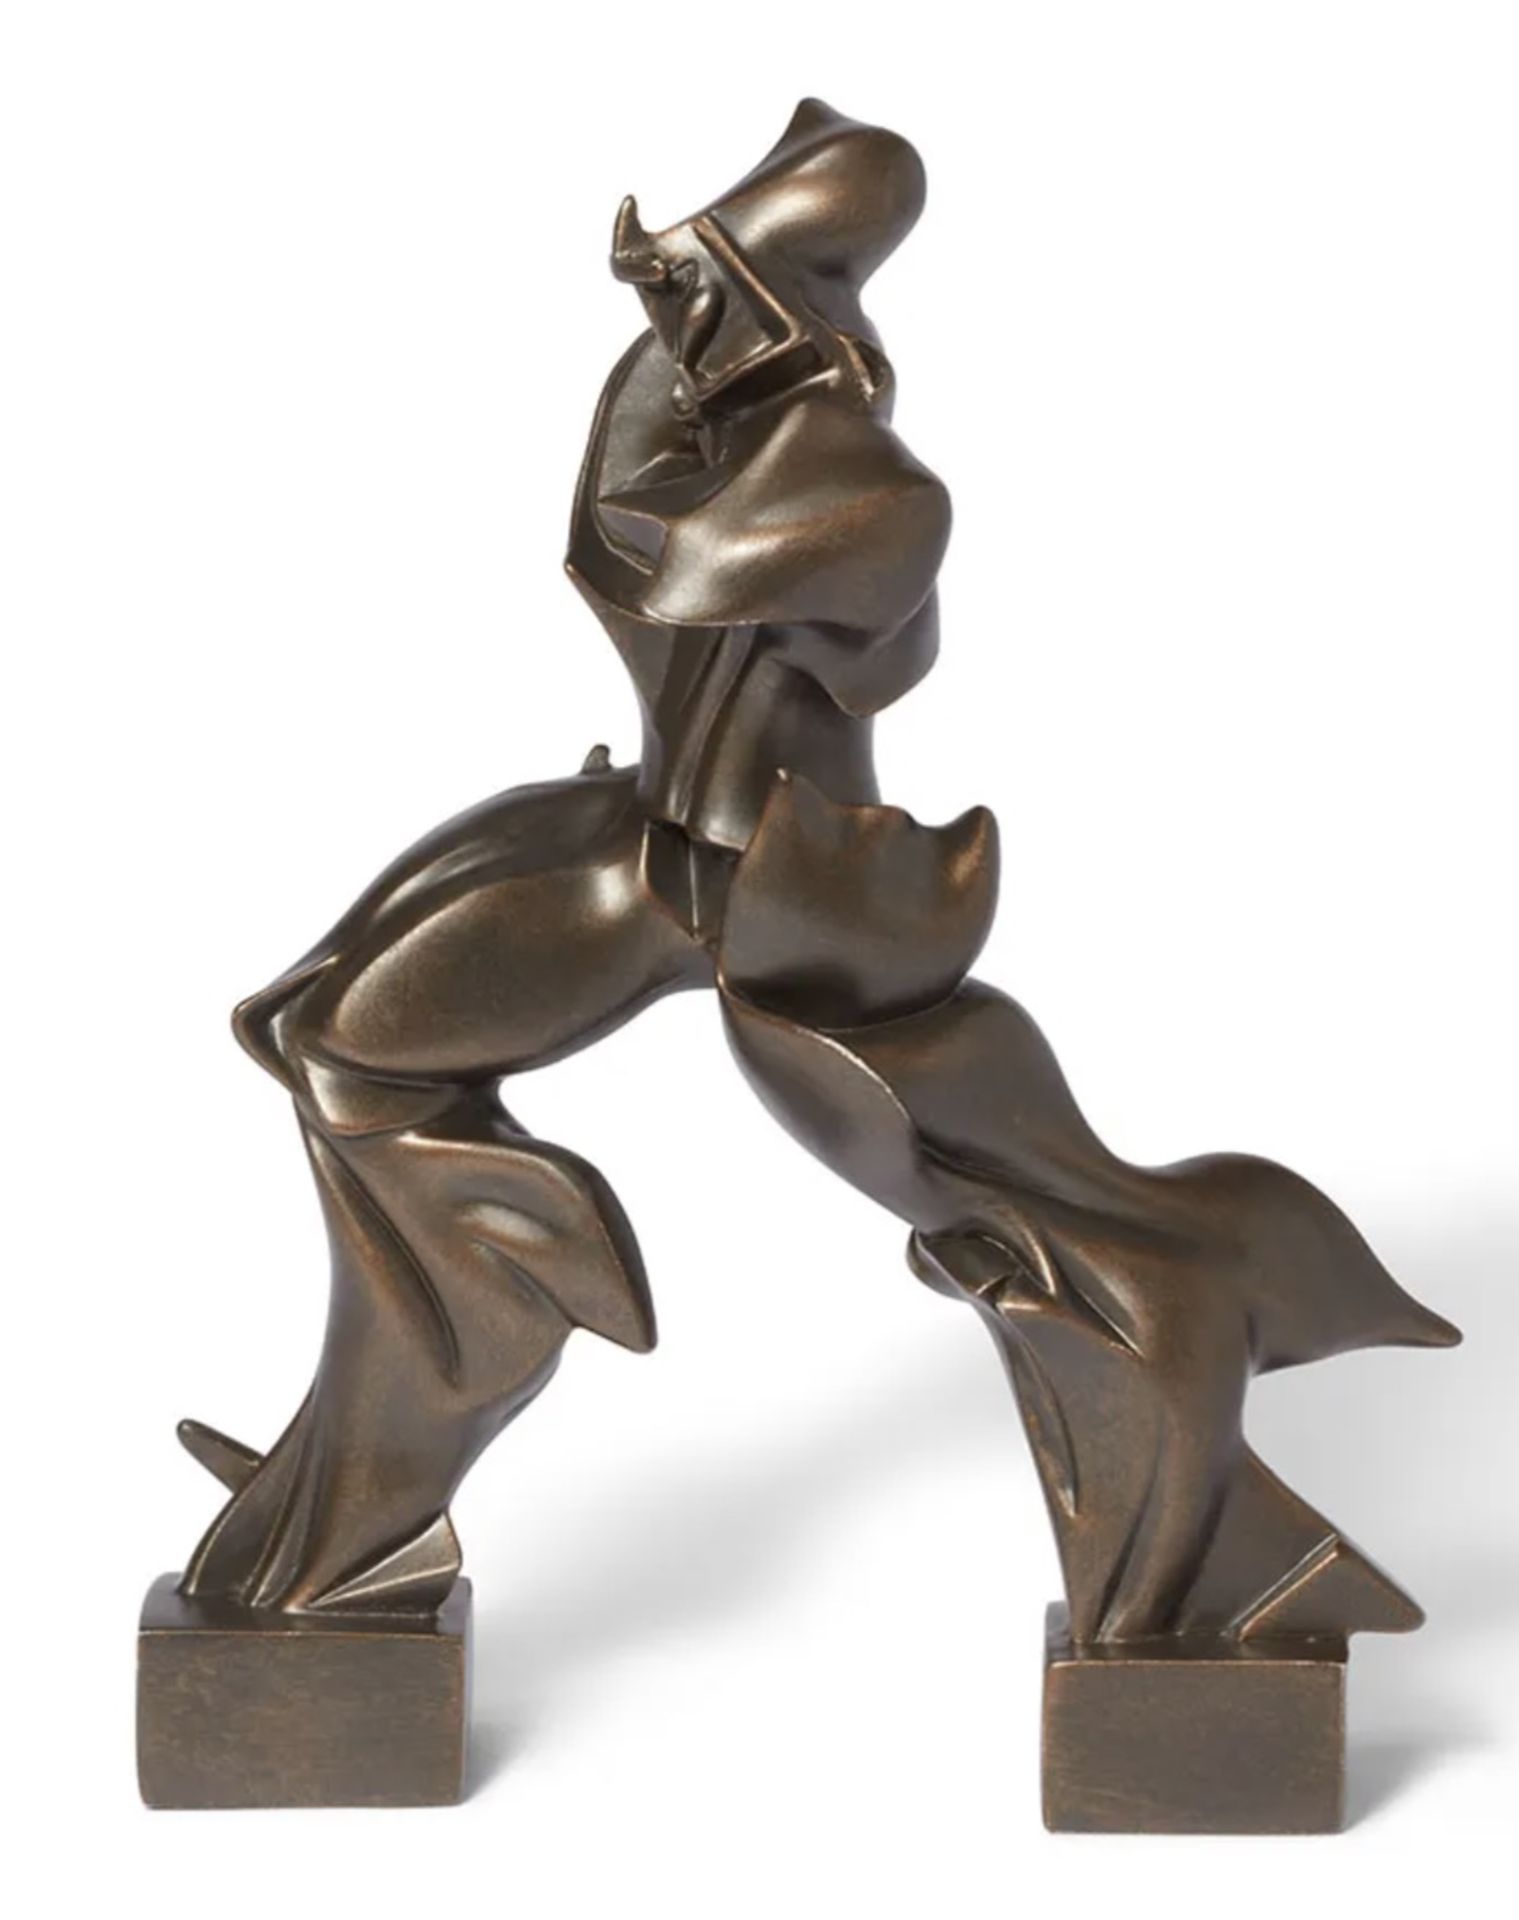 Umberto Boccioni "Unique Forms of Continuity in Space" Sculpture